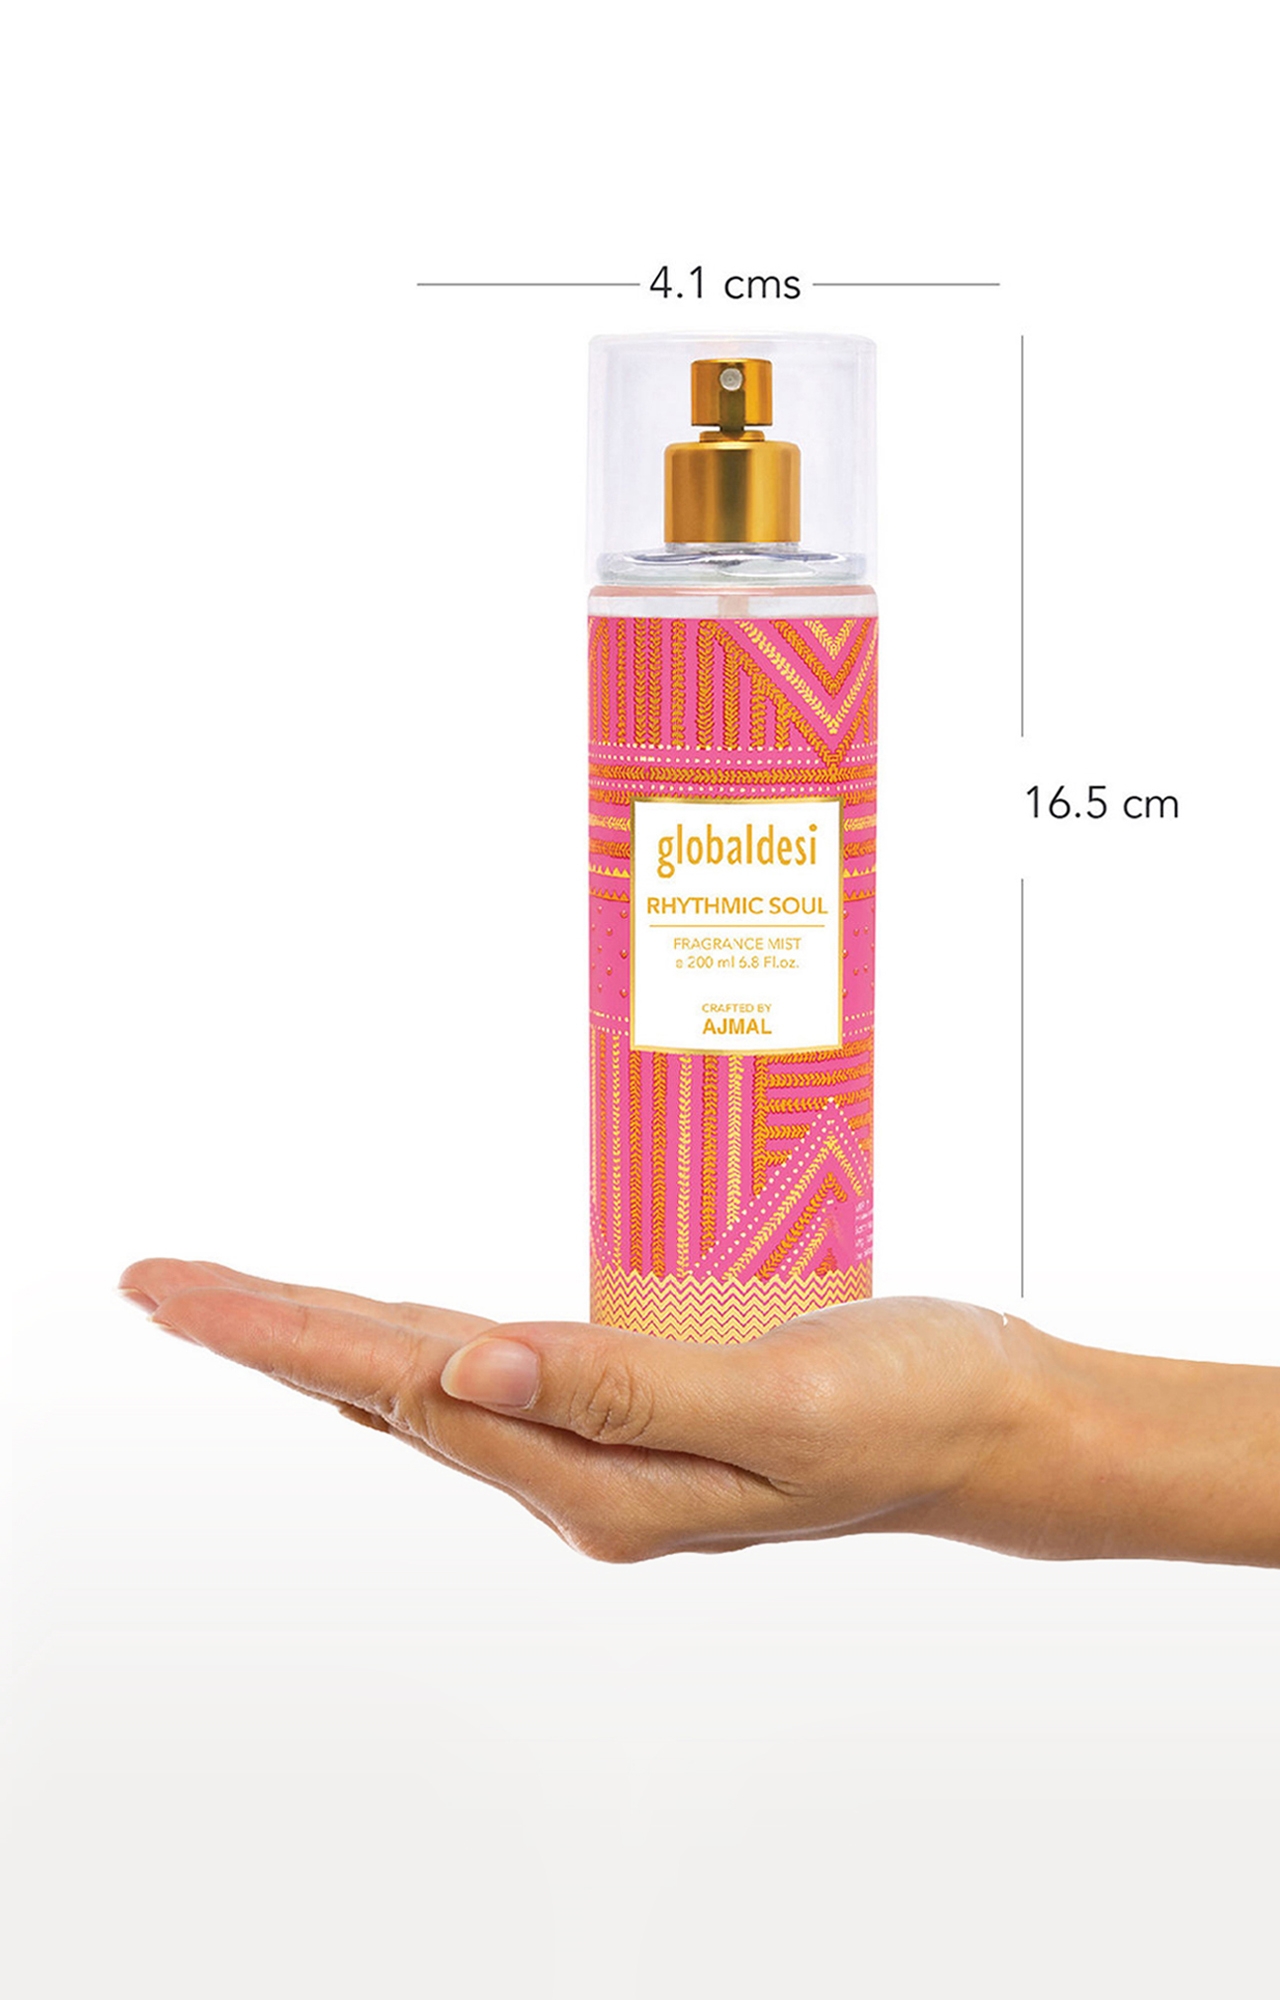 Global Desi Rhythmic Soul Body Mist Perfume 200ML Long Lasting Scent Spray Gift For Women Crafted by Ajmal 